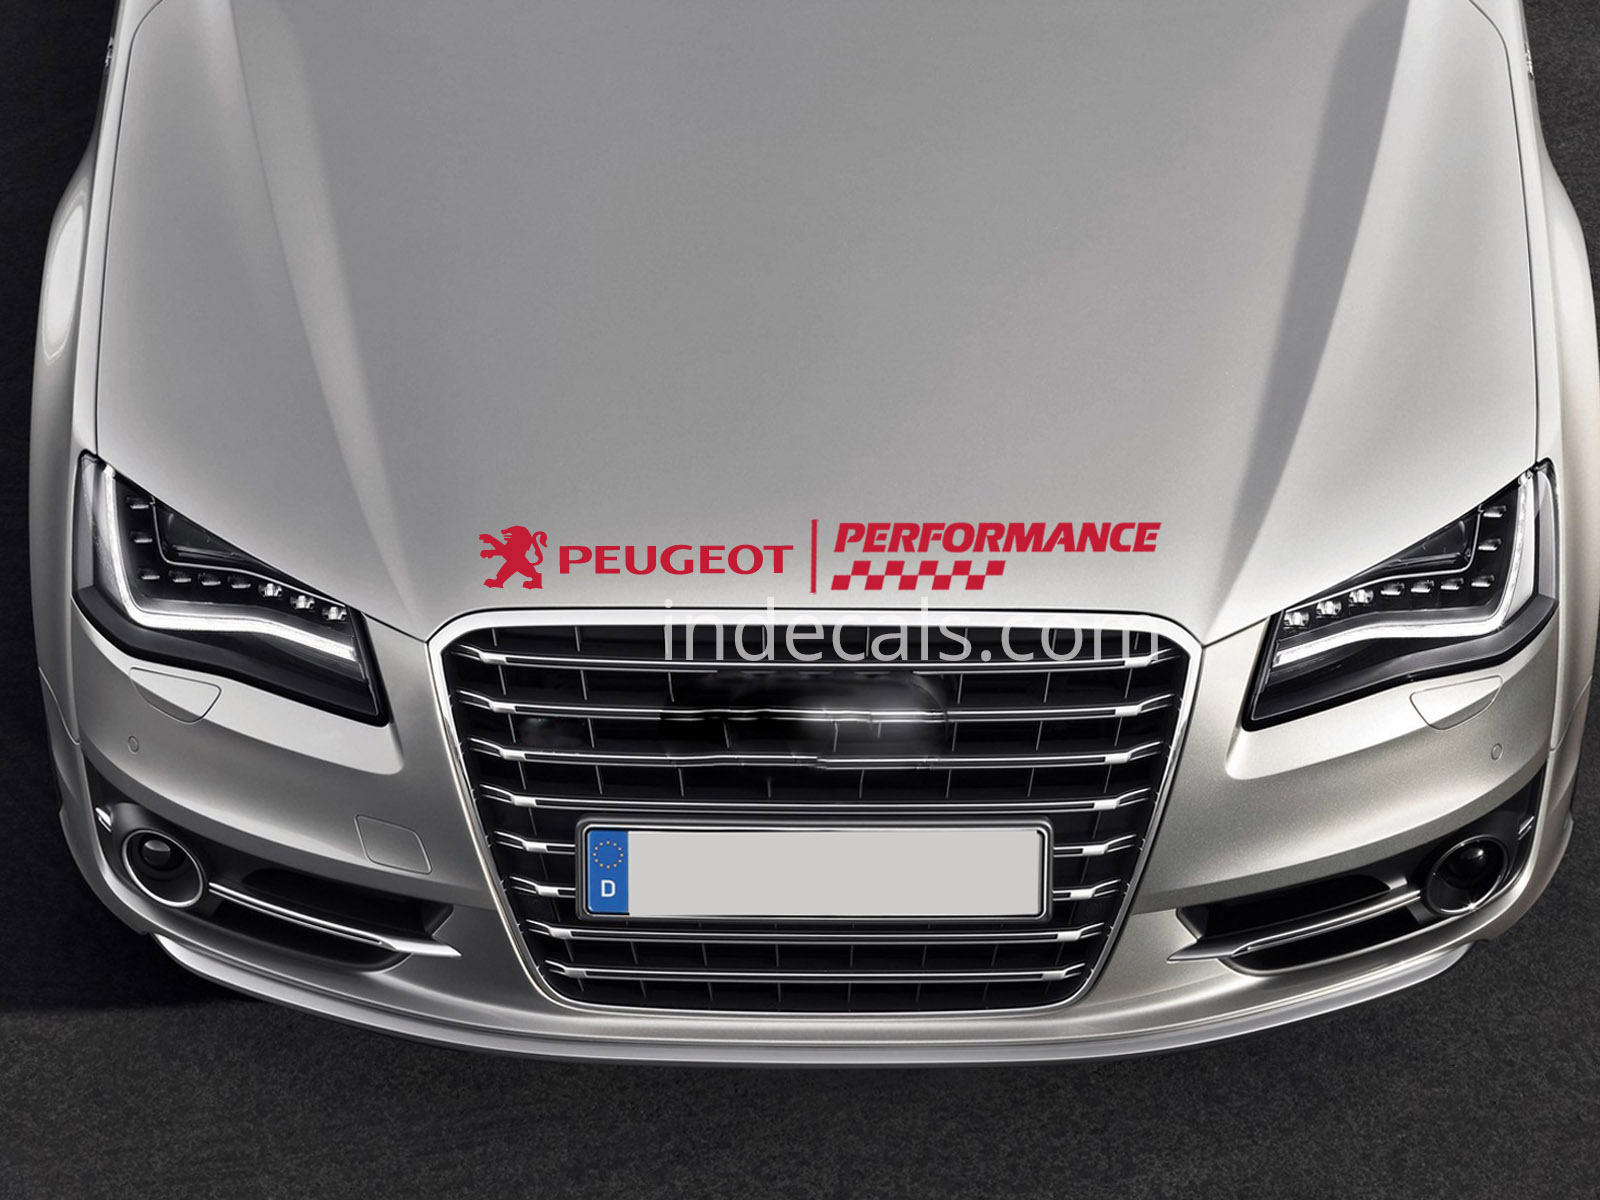 1 x Peugeot Performance Sticker for Bonnet - Red